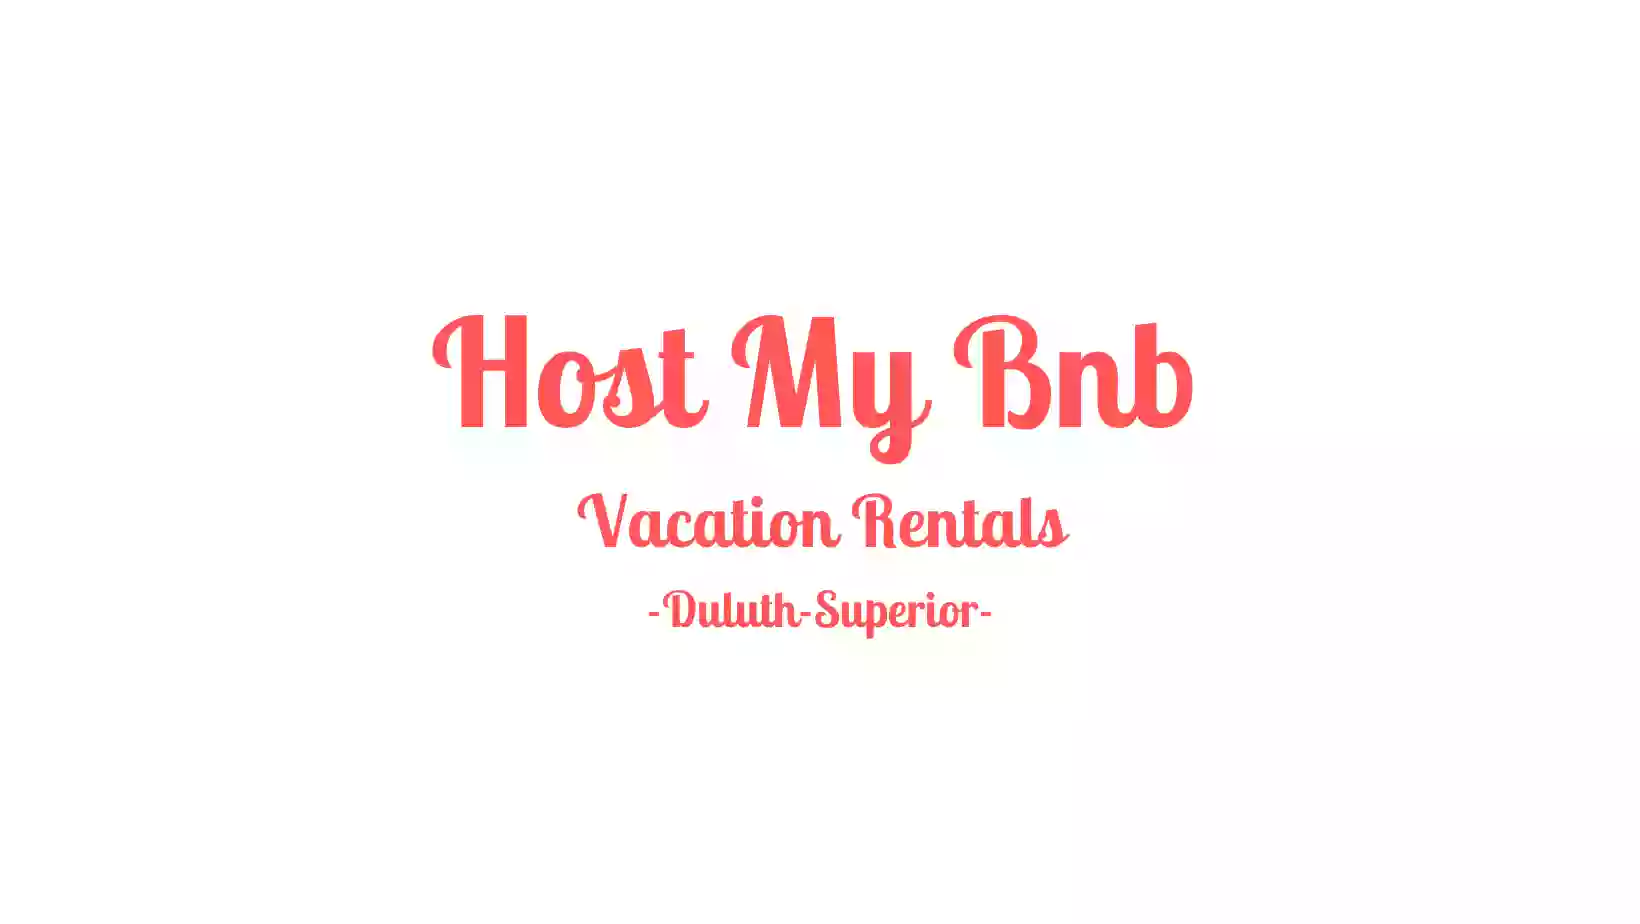 Host My Bnb, Inc